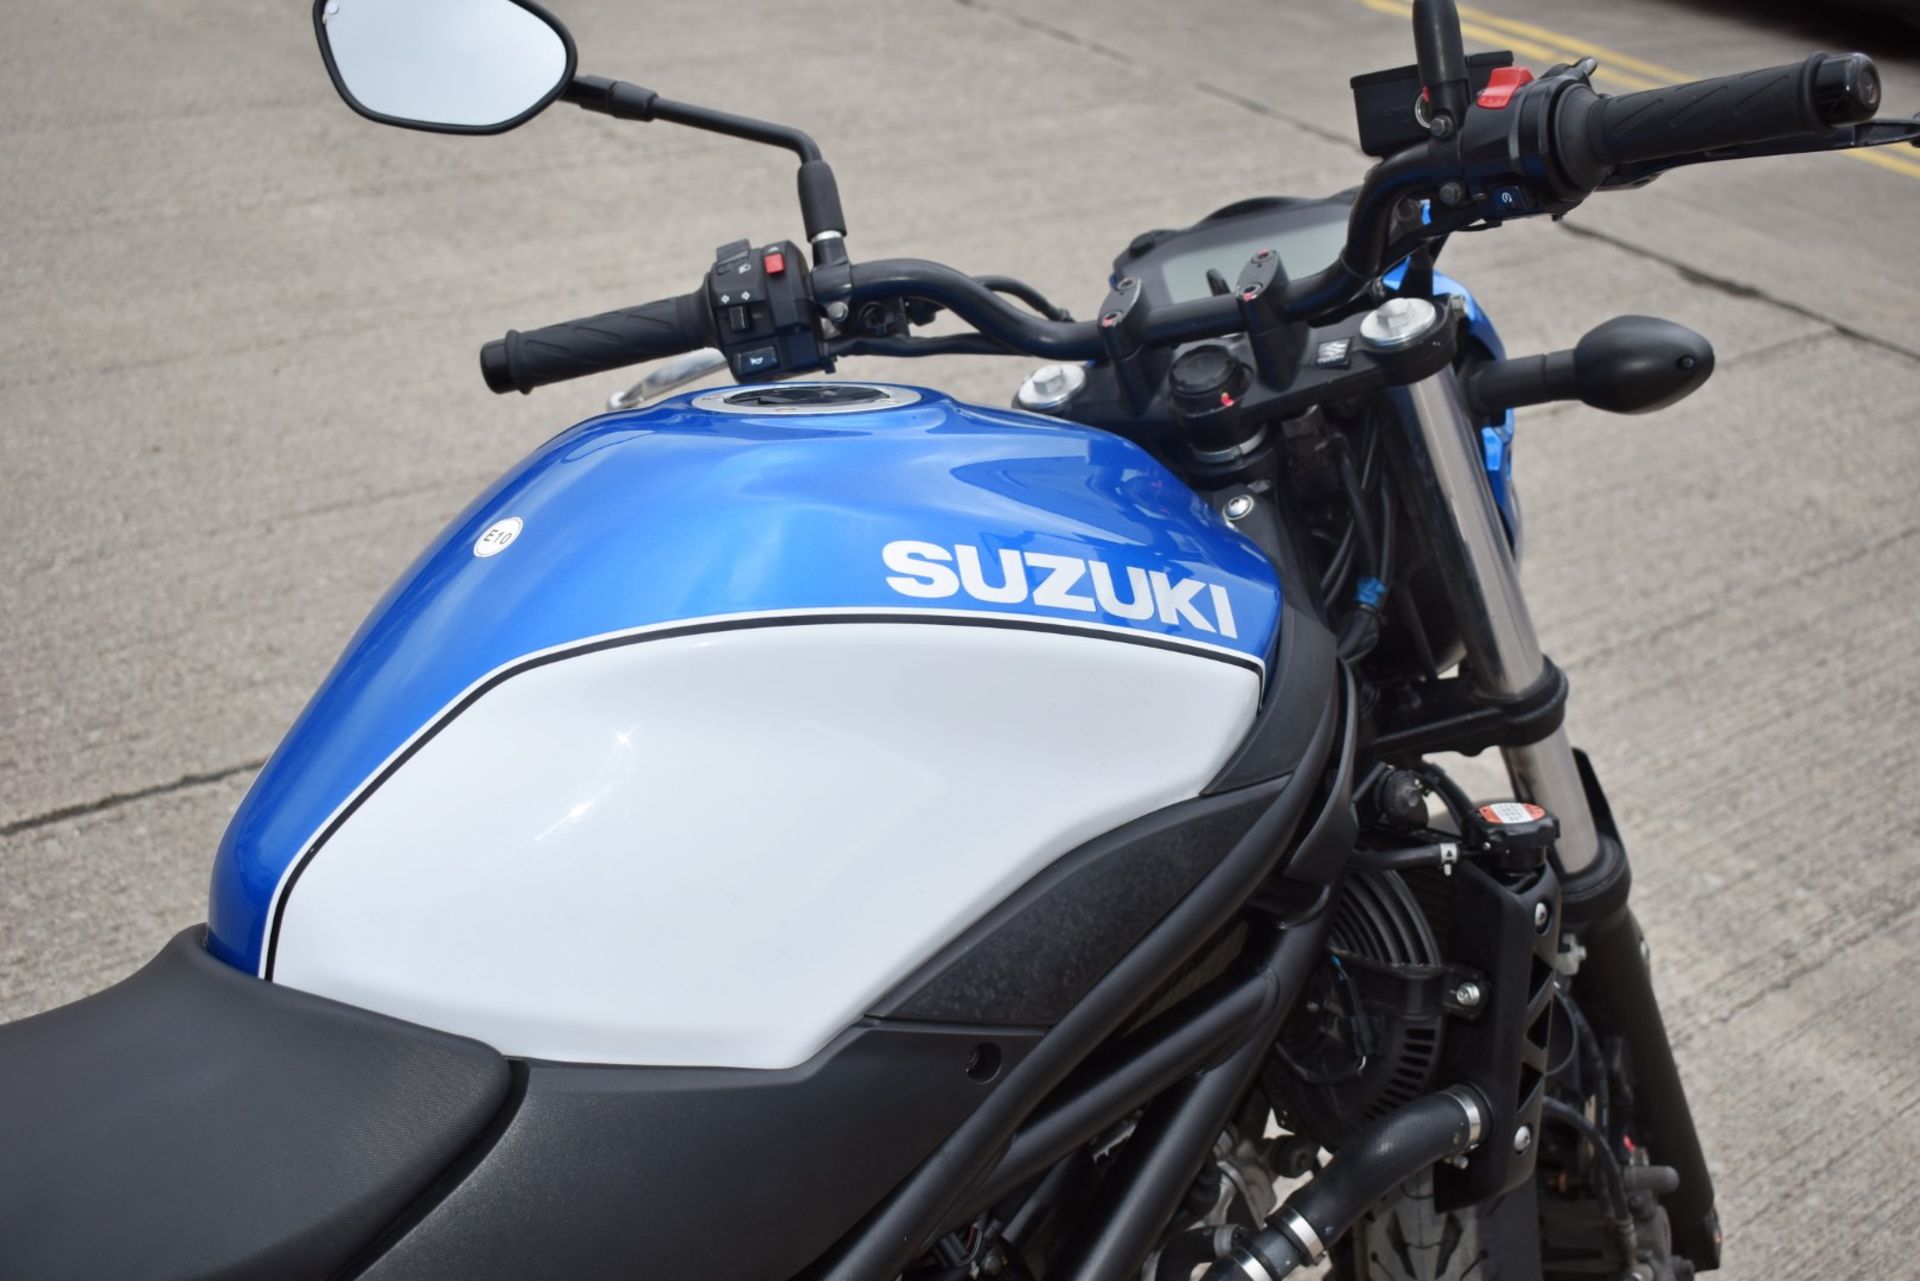 2018 Suzuki SV650 Motorcycle - BA18 UFV - Mileage: 18,188 - Image 13 of 25